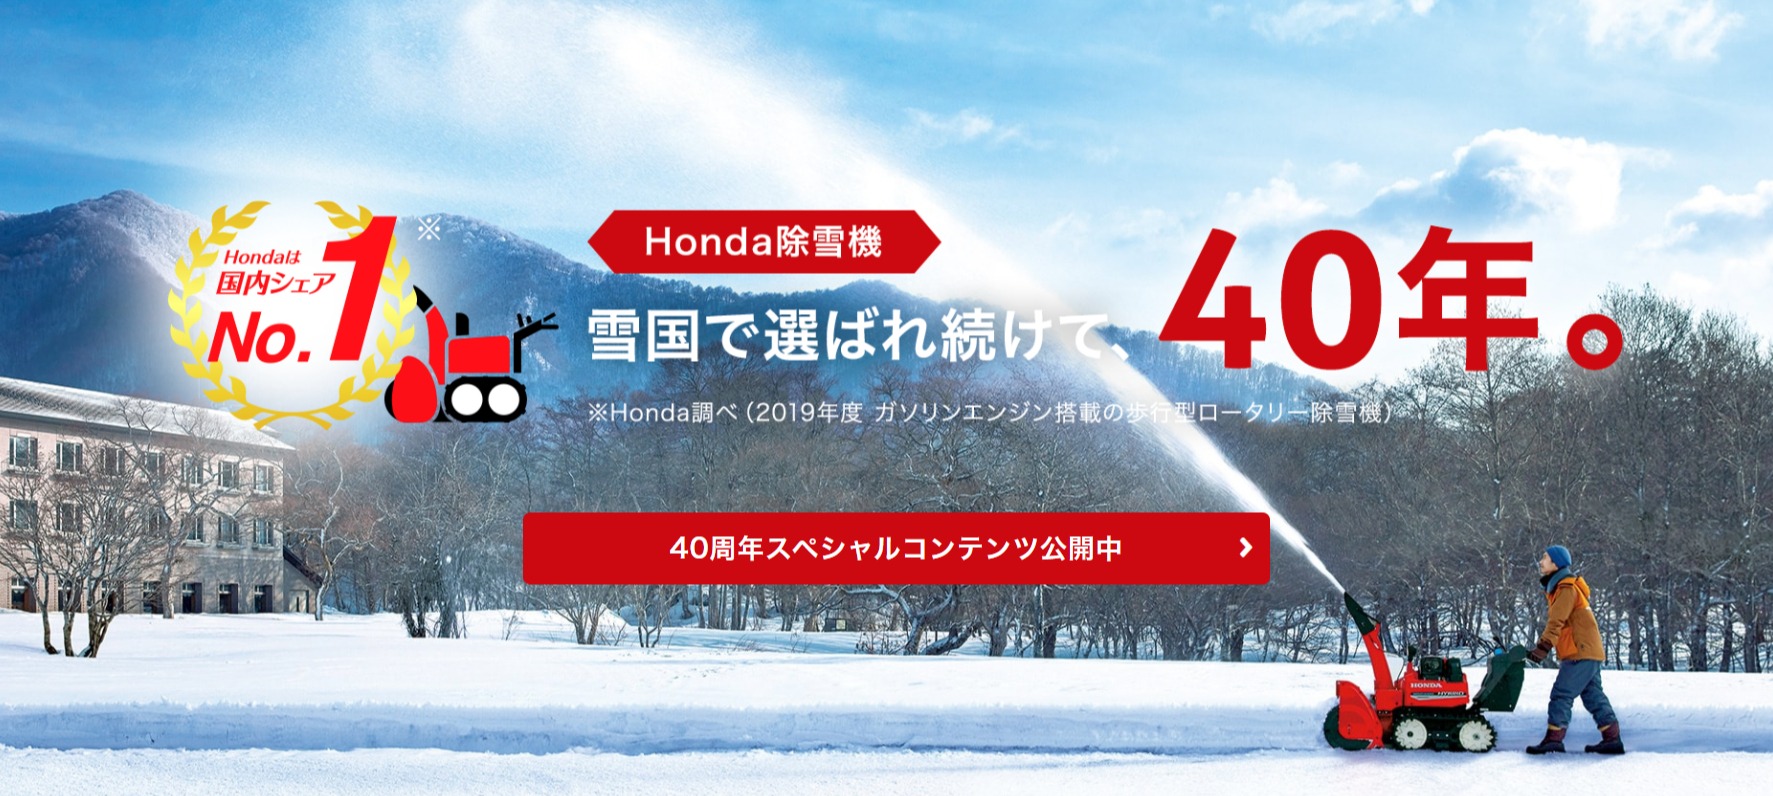 Honda除雪機 40周年スペシャルコンテンツ